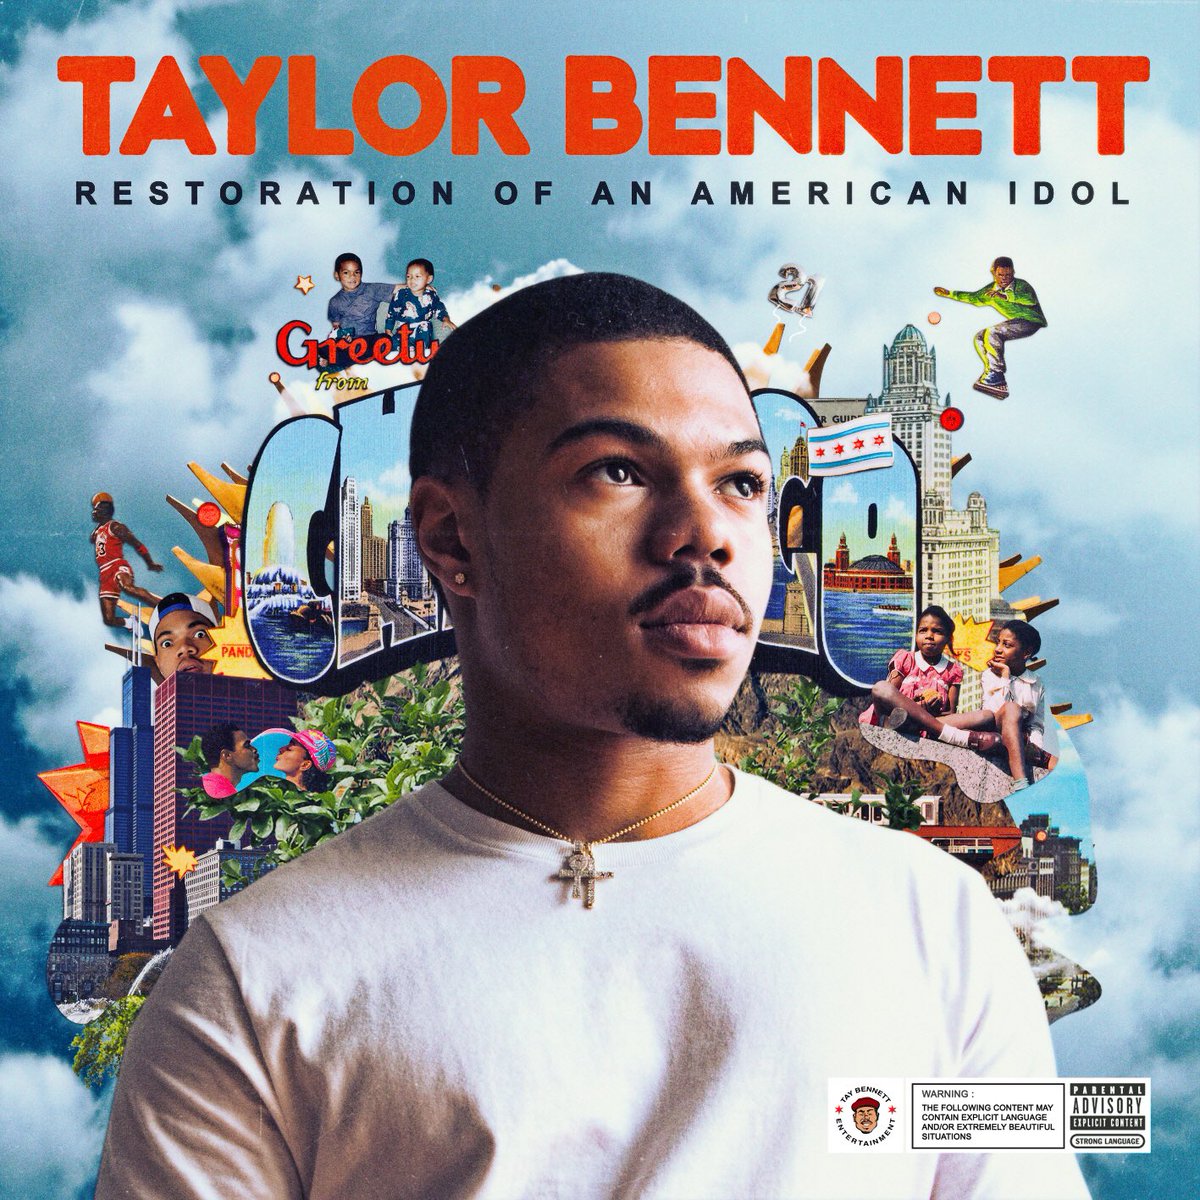 Taylor Bennett - "Restoration of an American Idol" (Release)